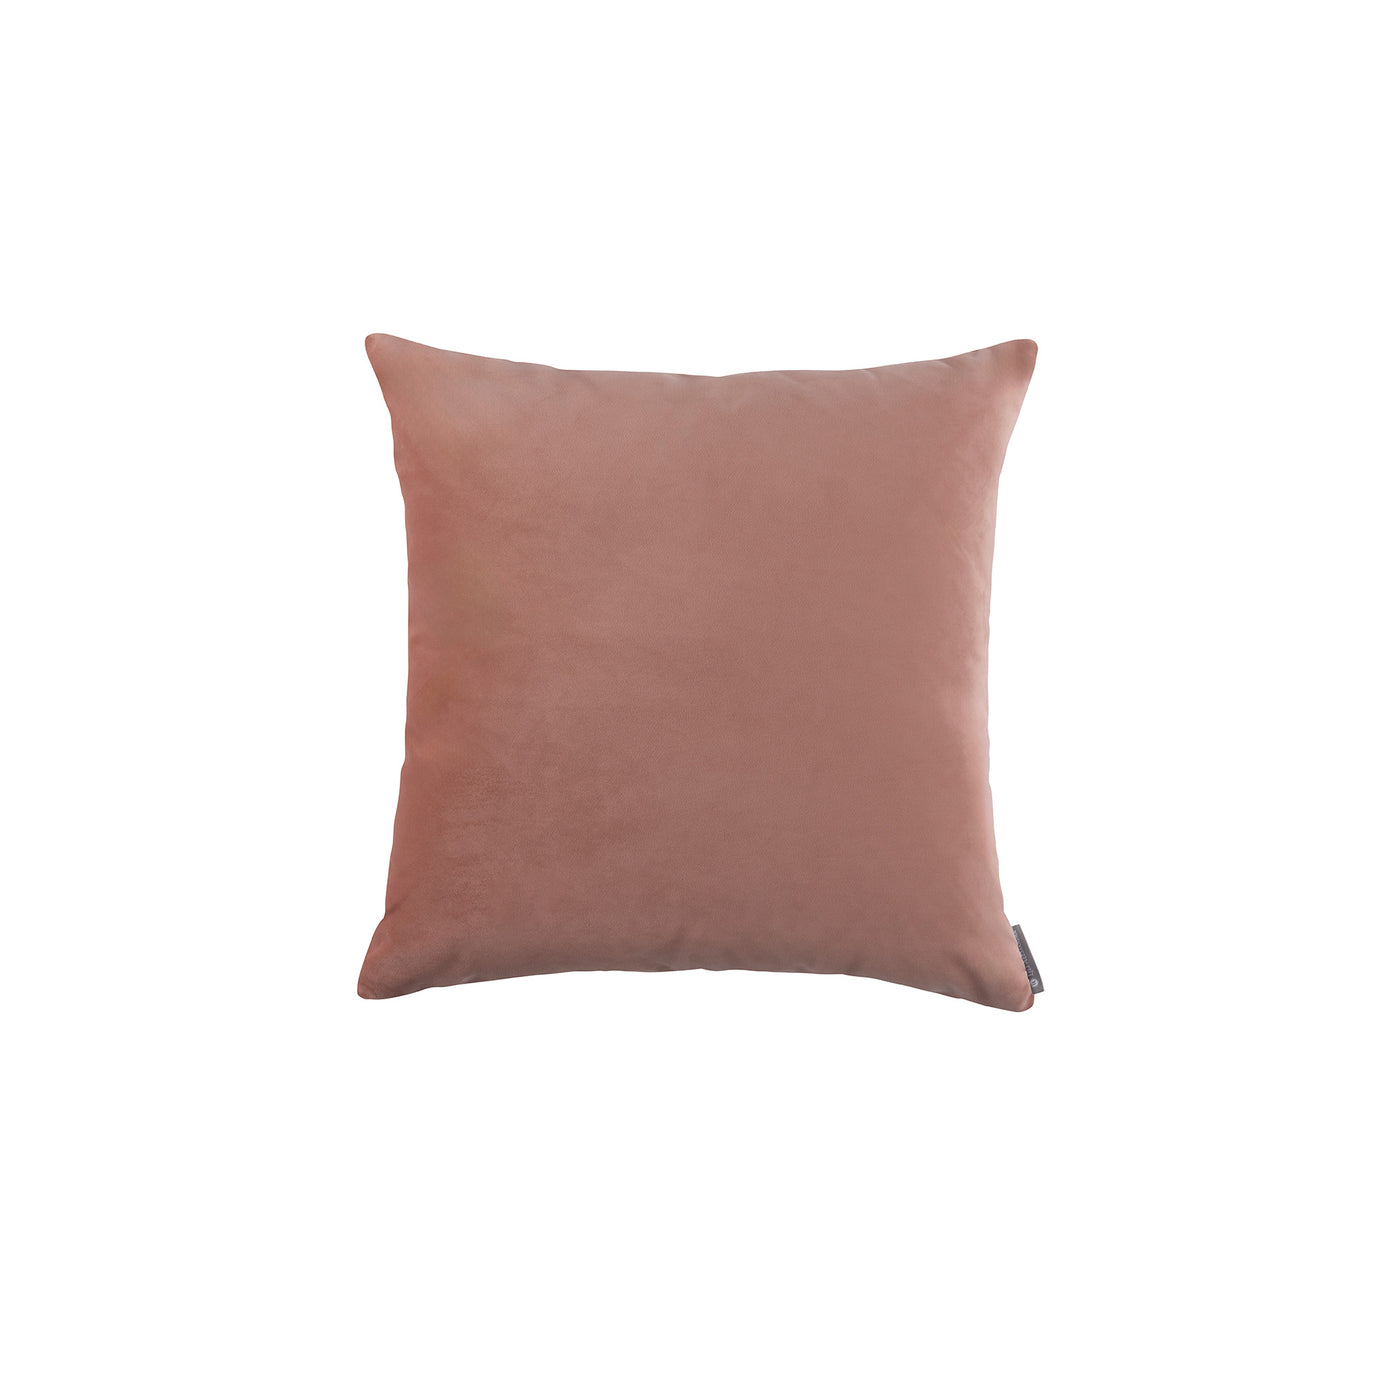 Vivid Shell European Pillow (26x26)